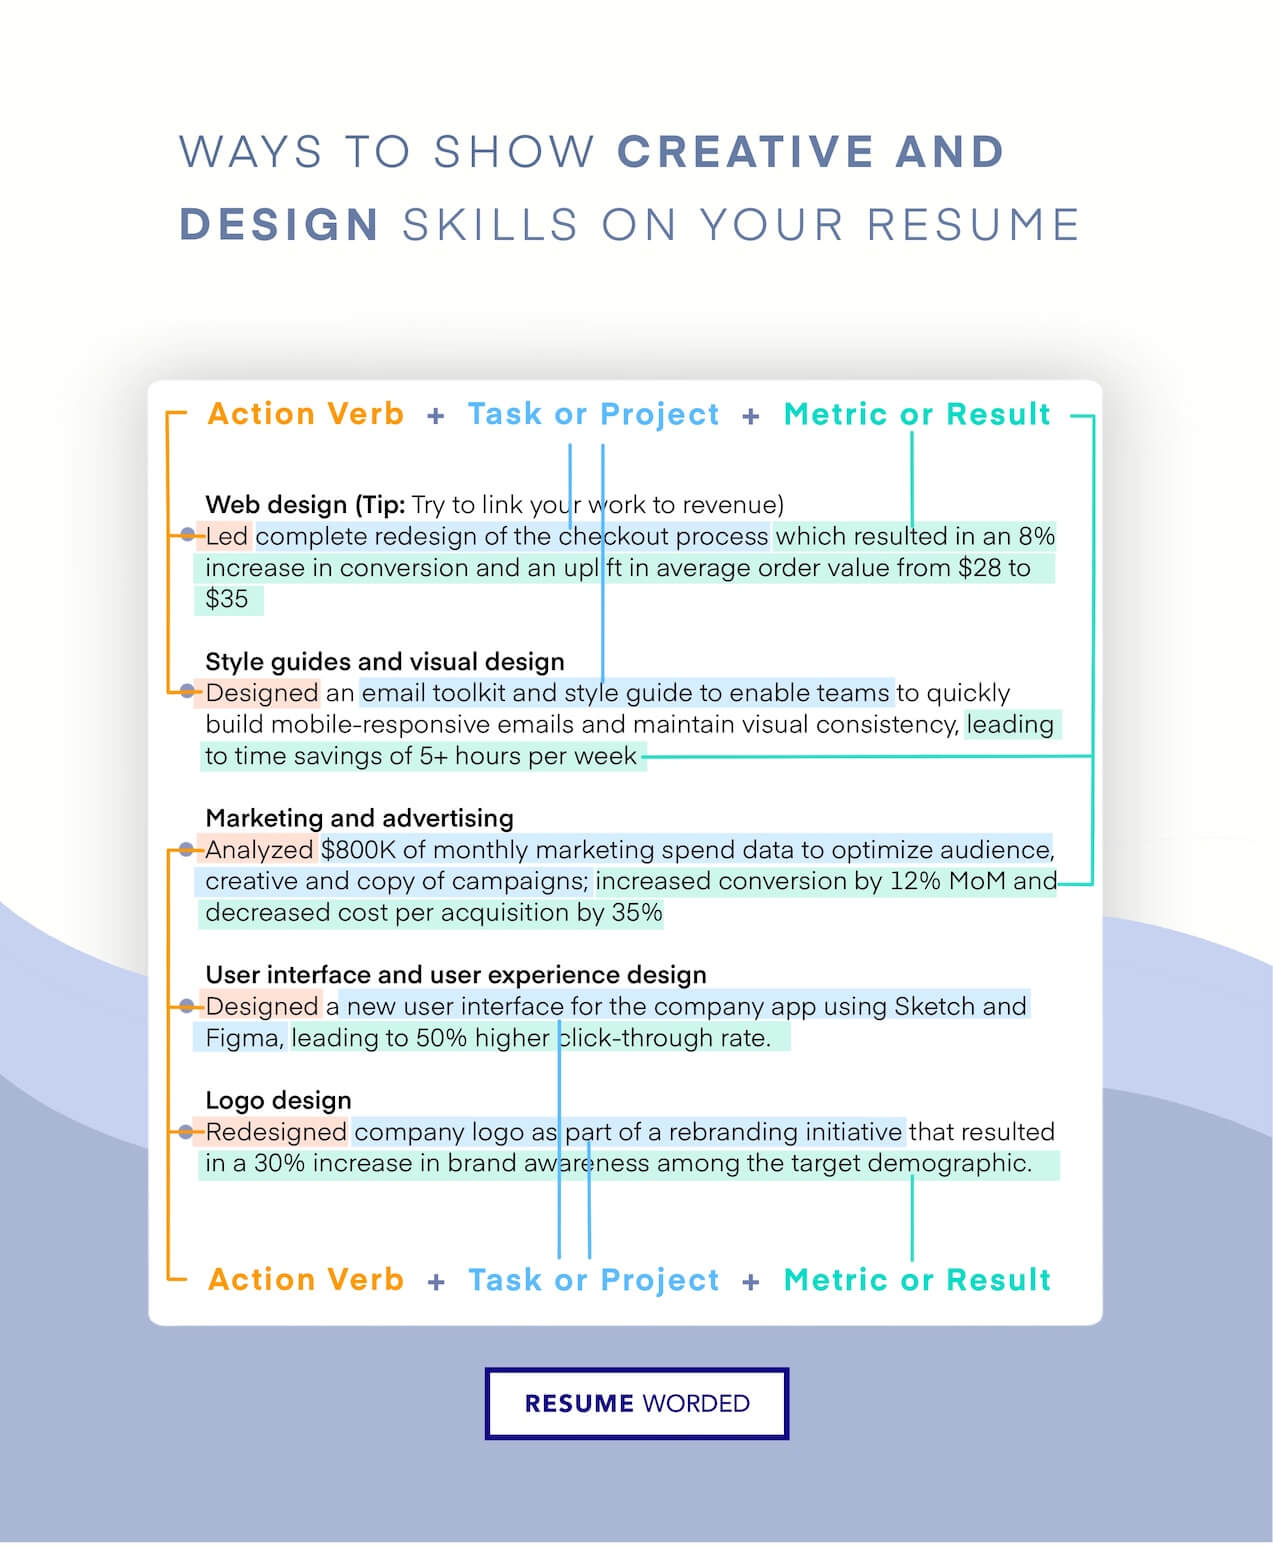 Uses numbers and metrics relevant to UI/UX designer roles - UI / UX Designer Resume